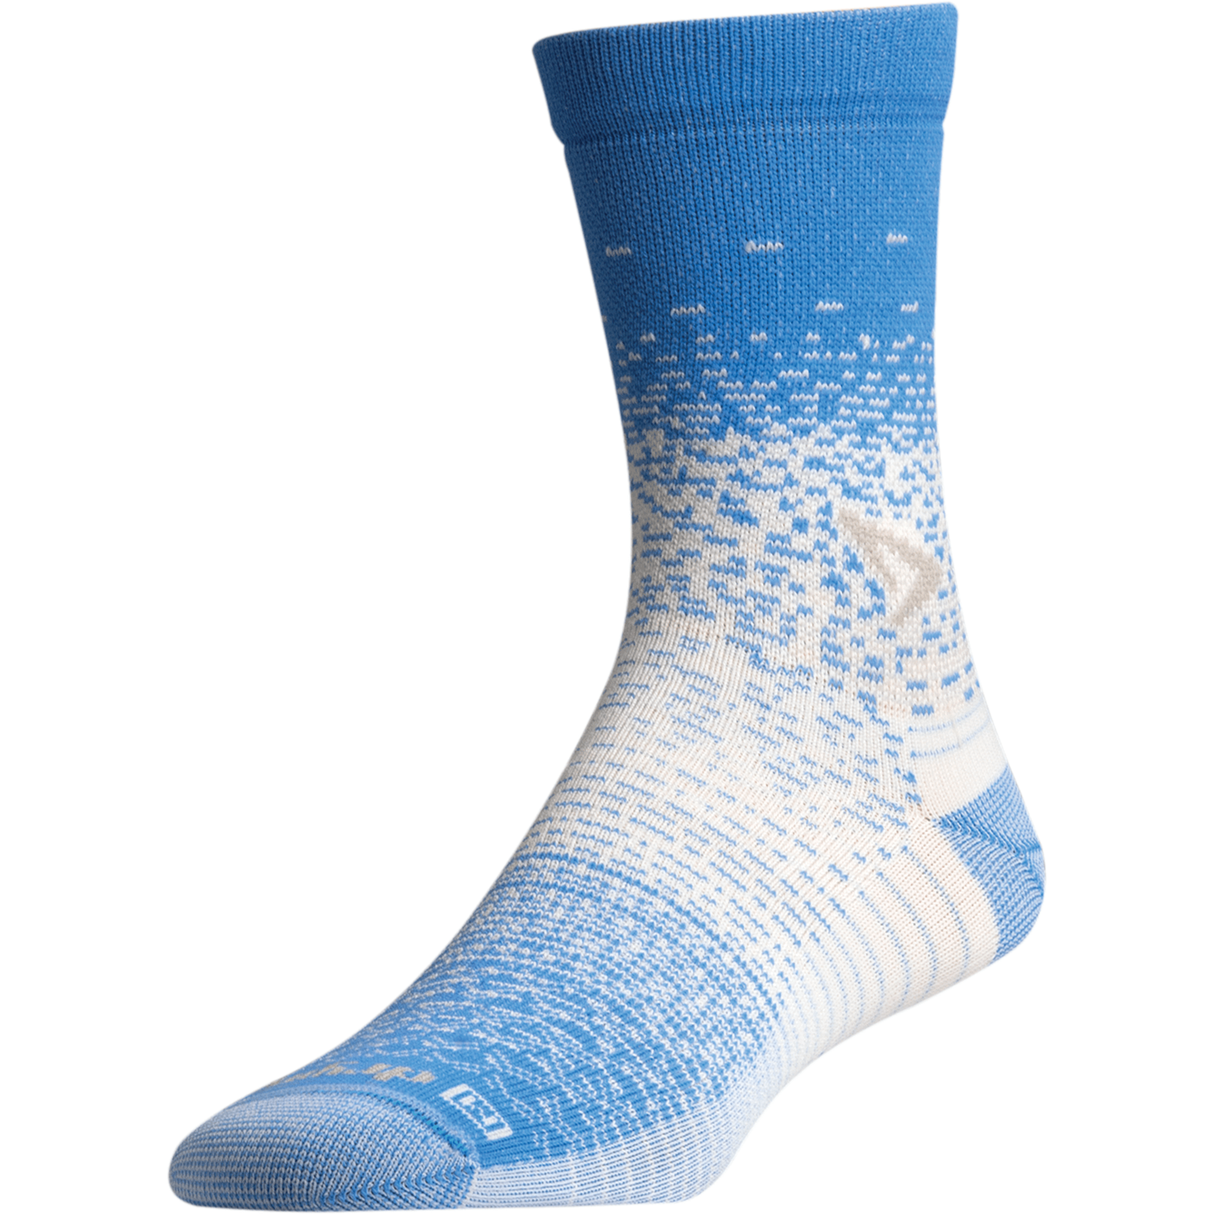 Drymax Thin Running Crew Socks  -  Small / Big Sky Blue/Gray/White